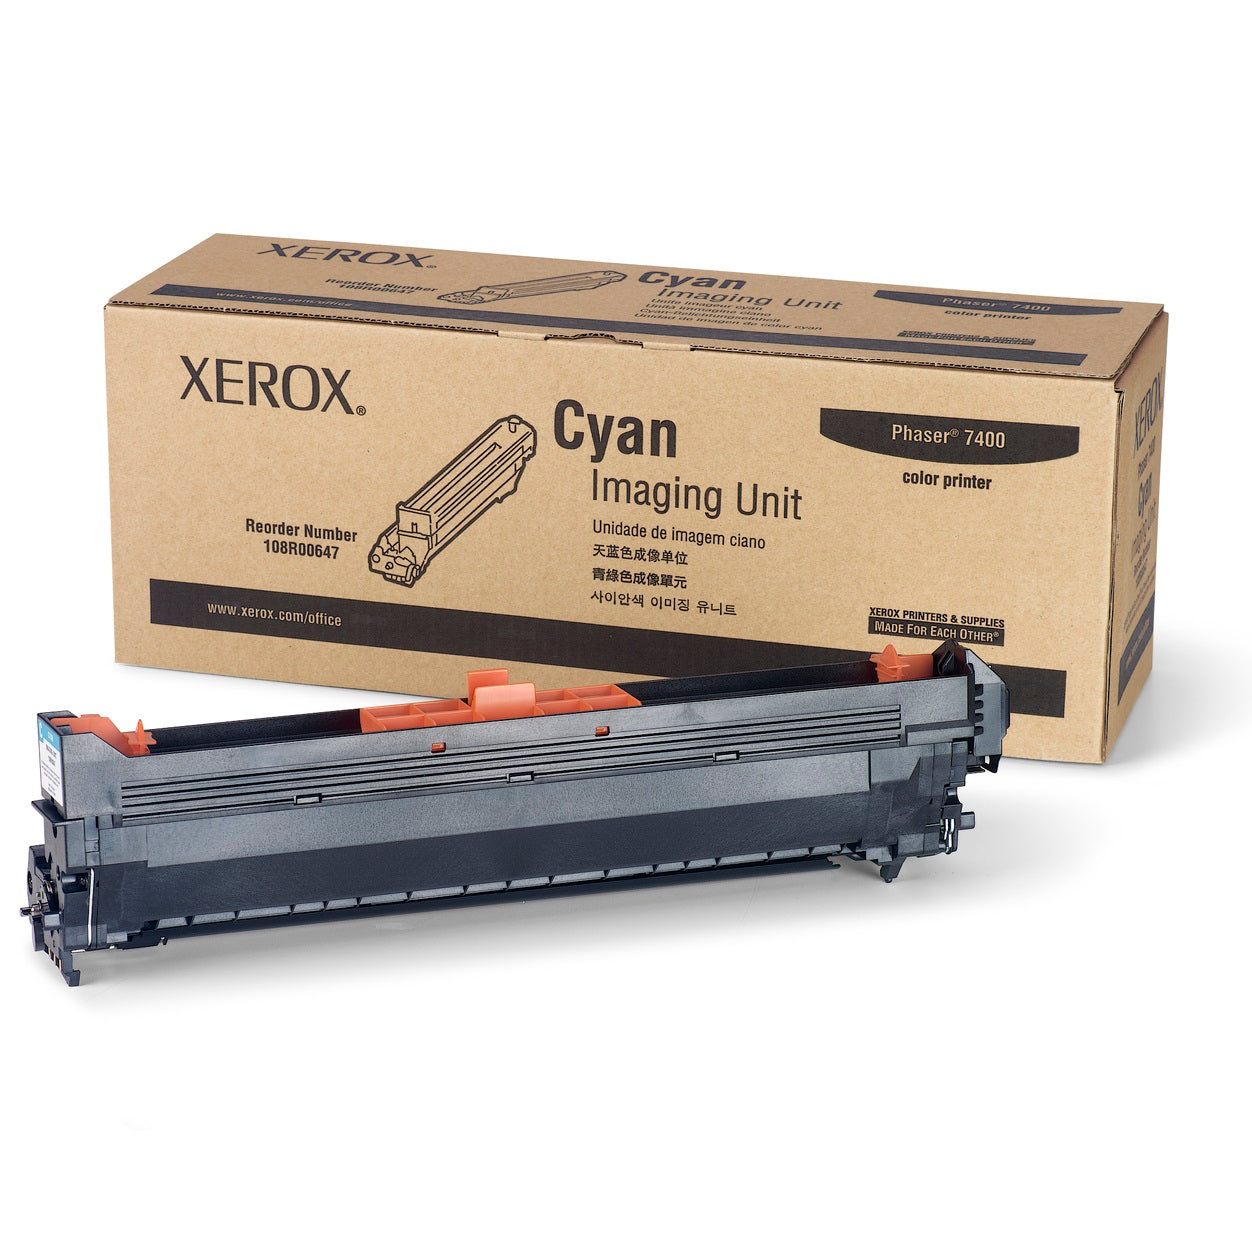 Absolute Toner Genuine Xerox 108R00647 Cyan Laser Imaging Unit for Phaser 7400 Printer | Original OEM Original Xerox Cartridges